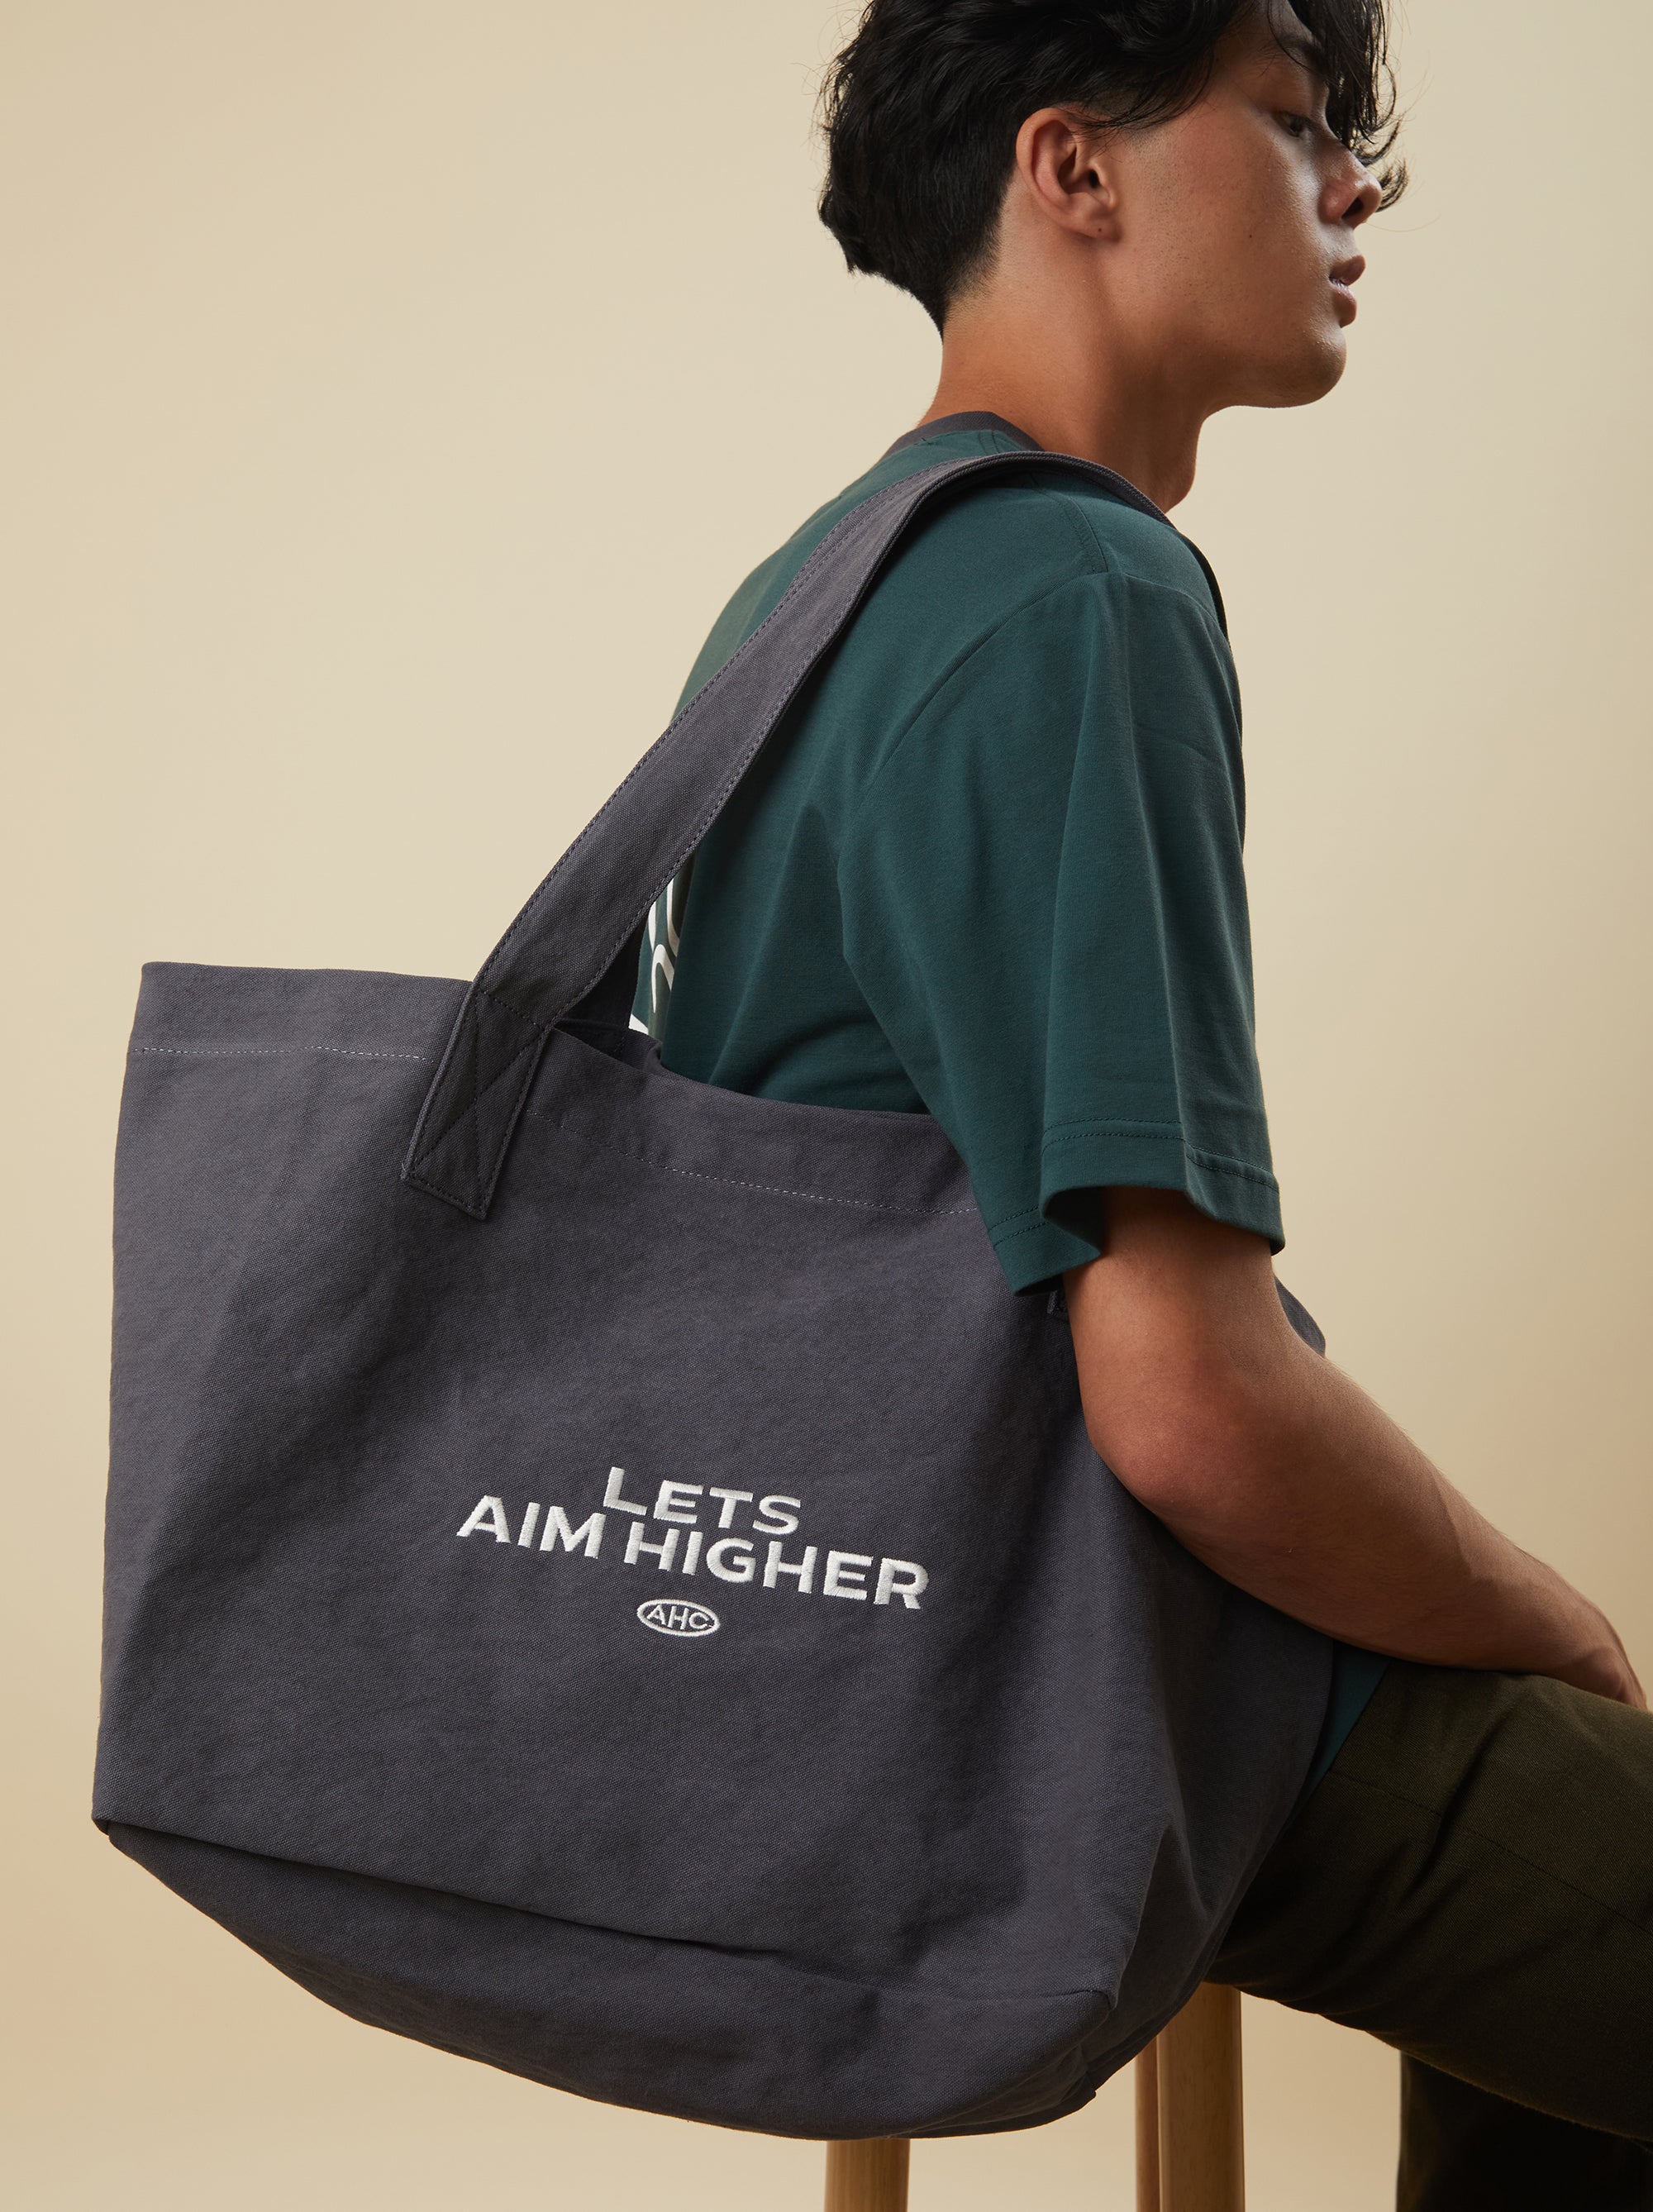 Aim Higher Club Tote Bag